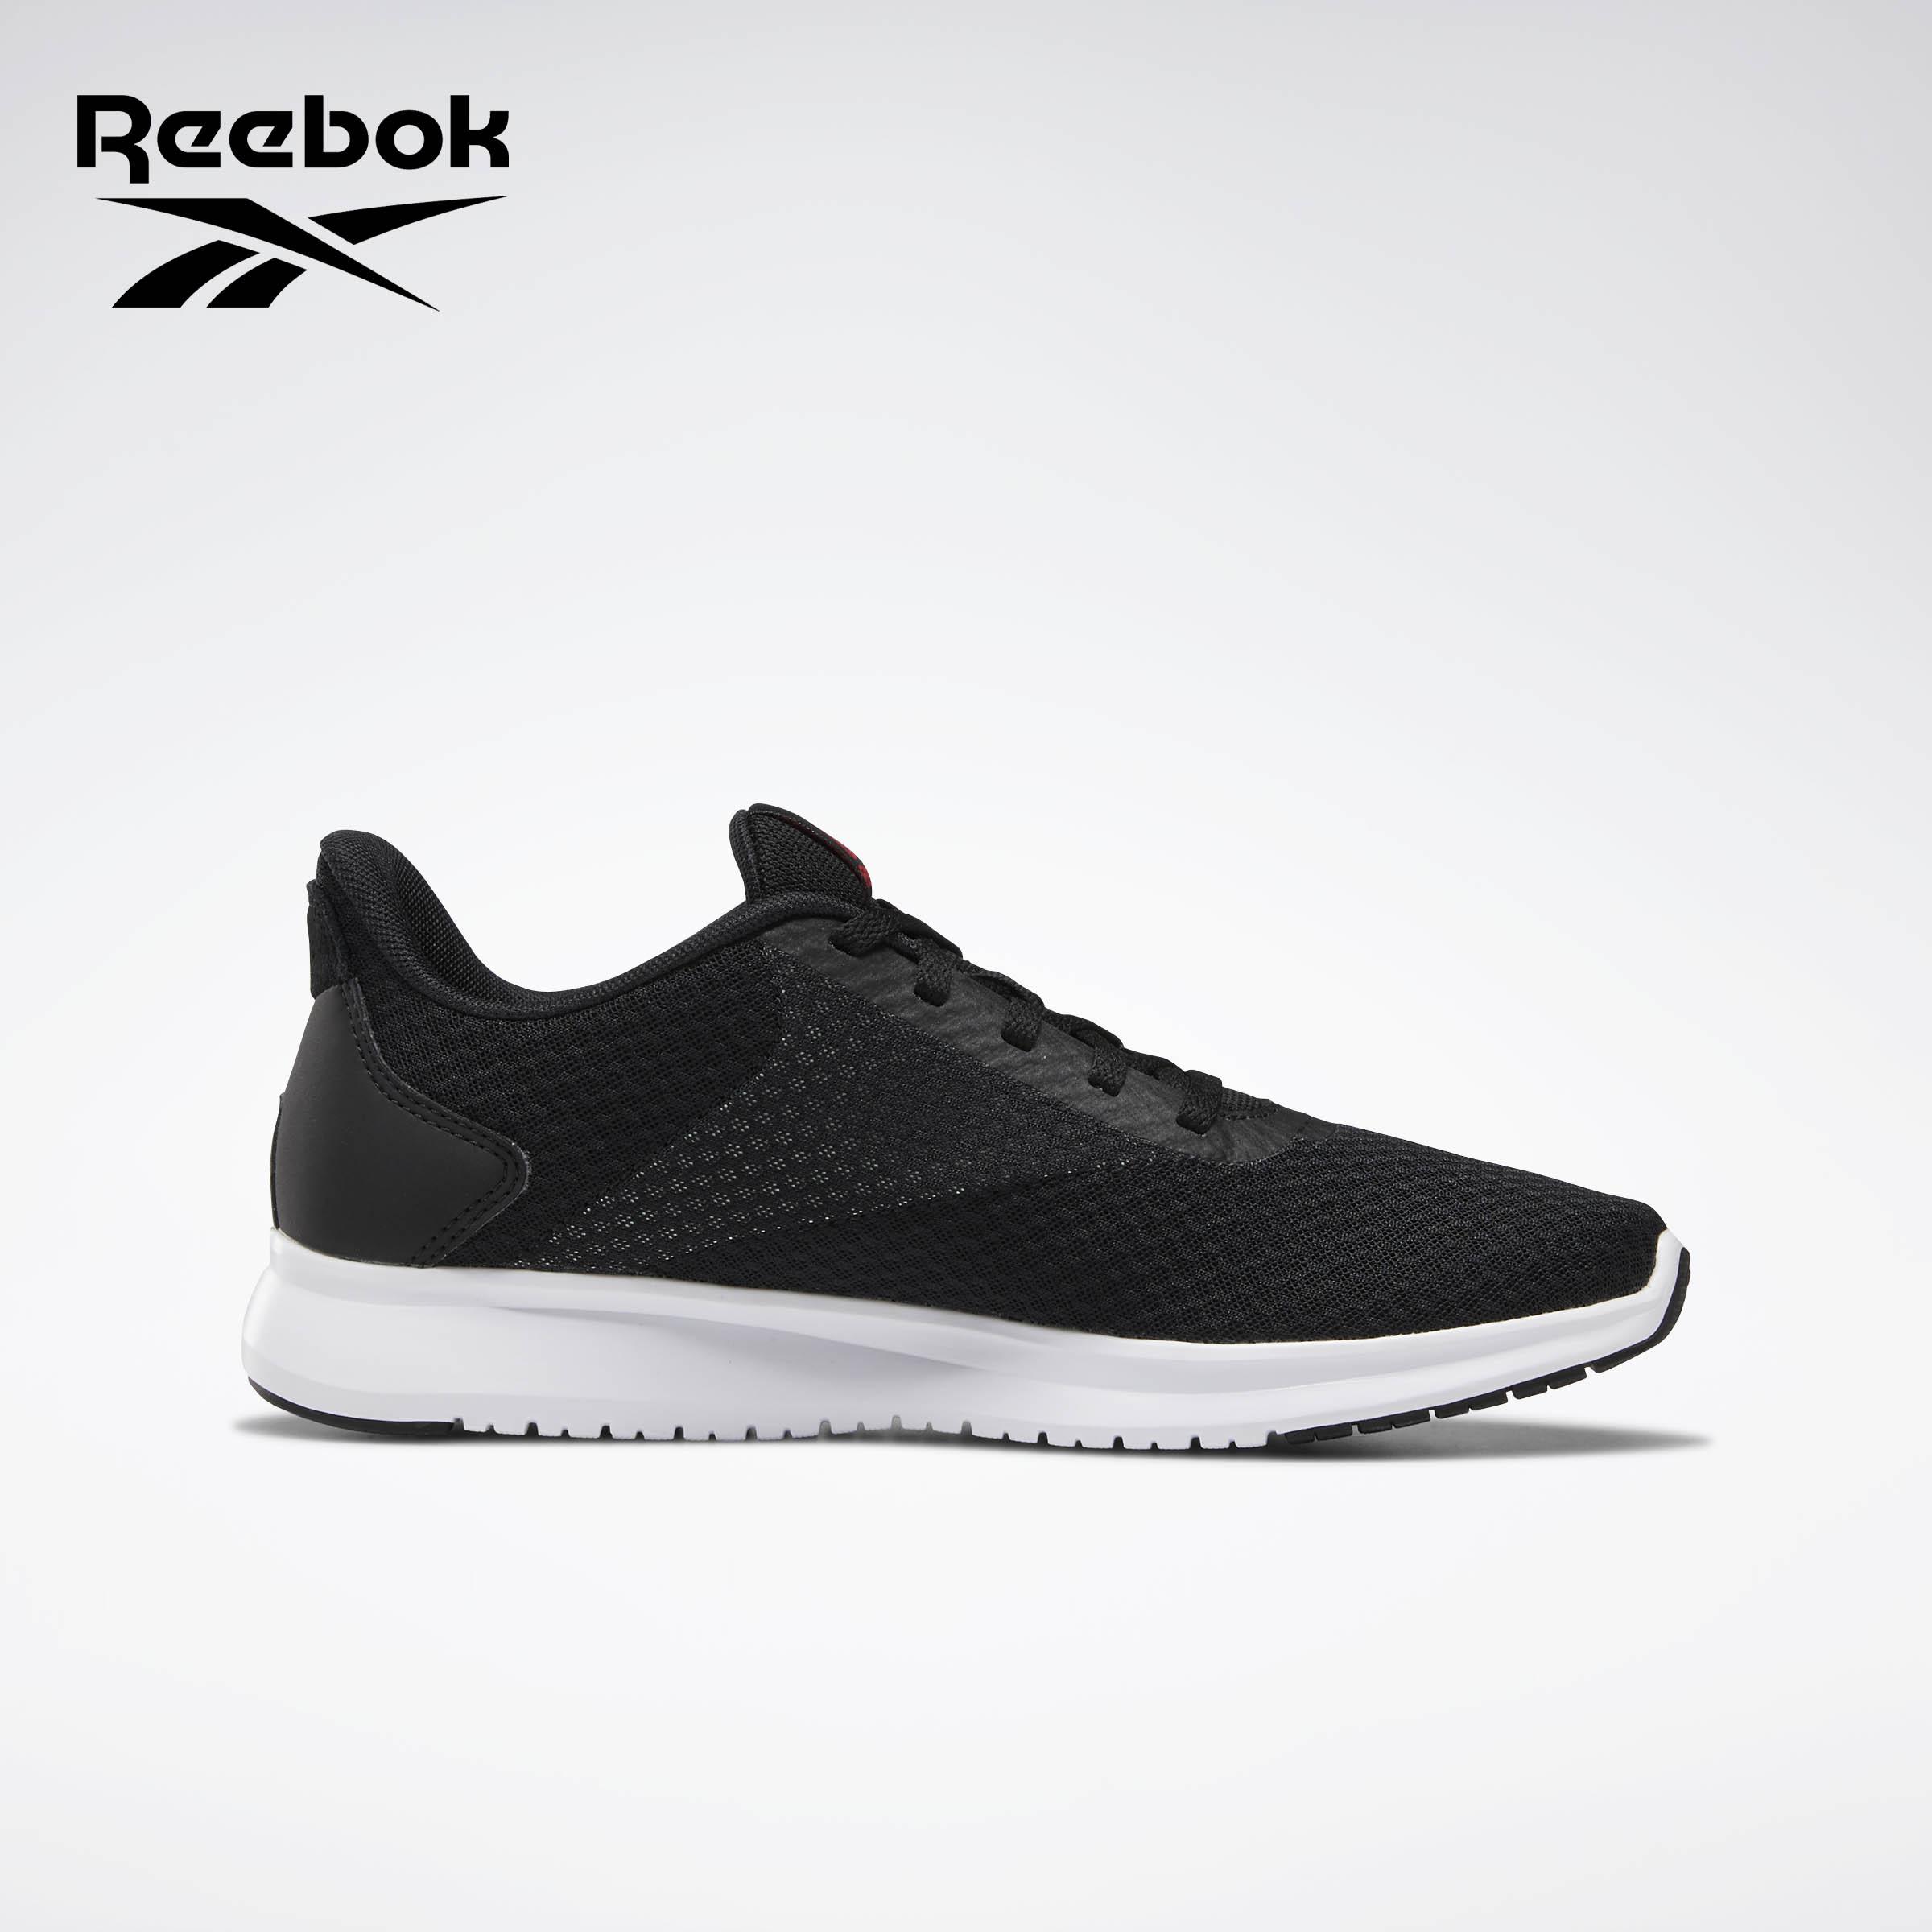 reebok shoes buy online